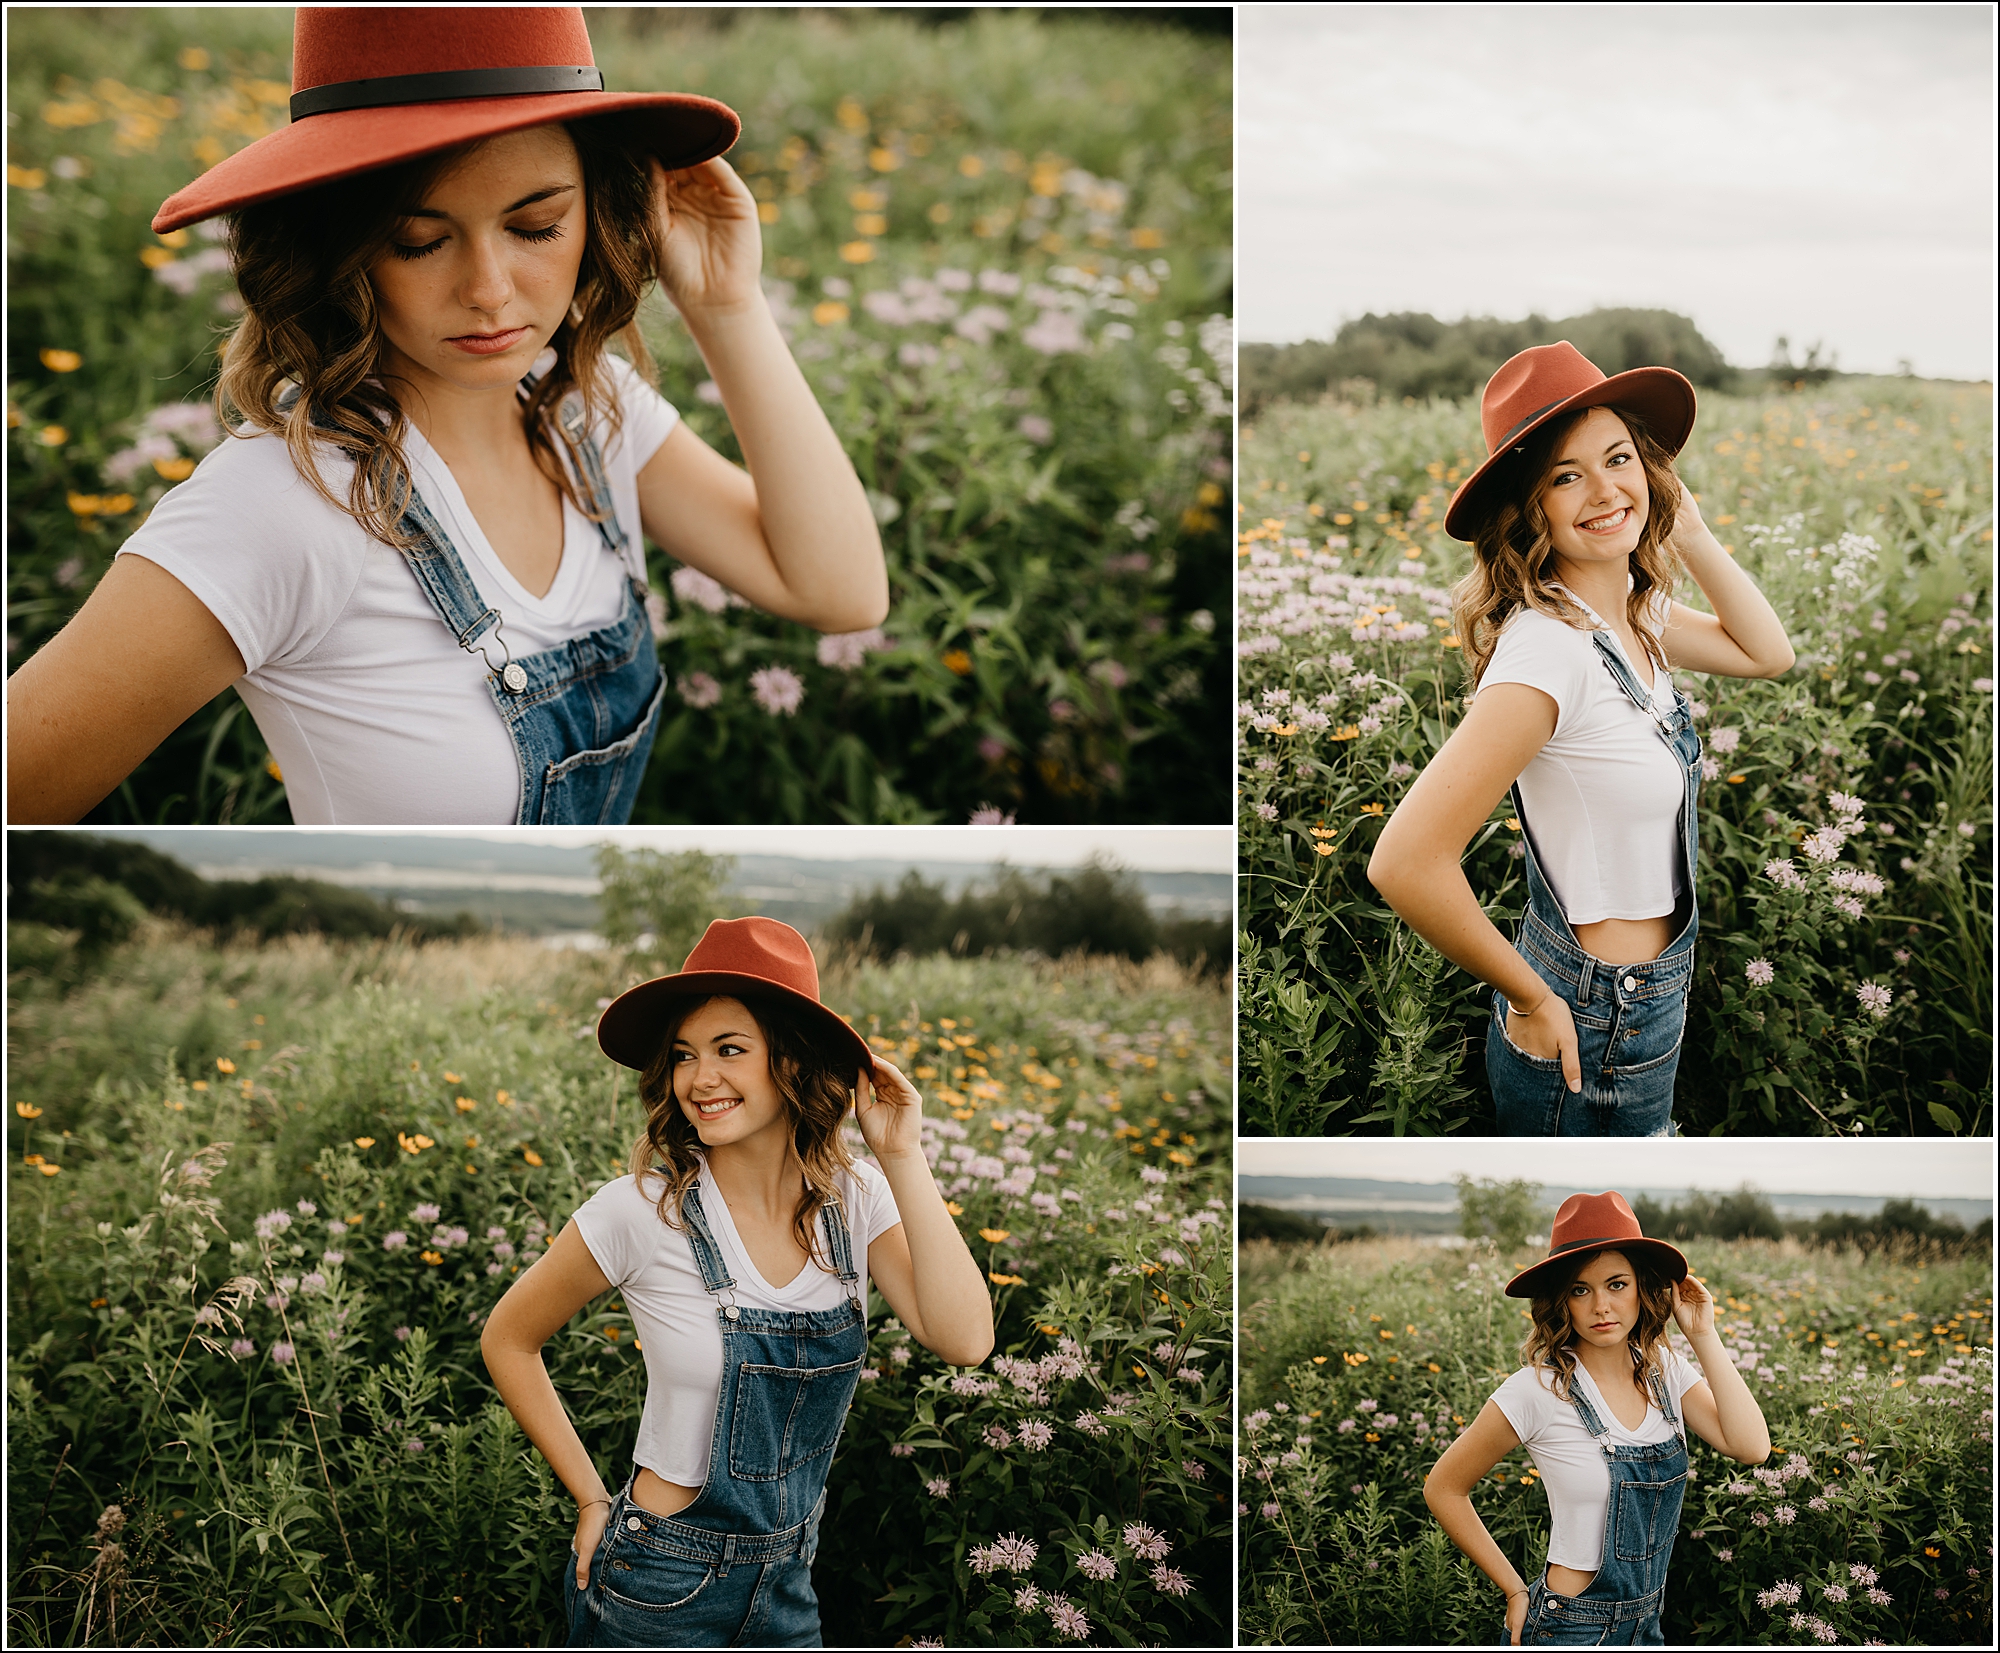 minnesota senior photographer girl bibs wildflowers red hat adorable